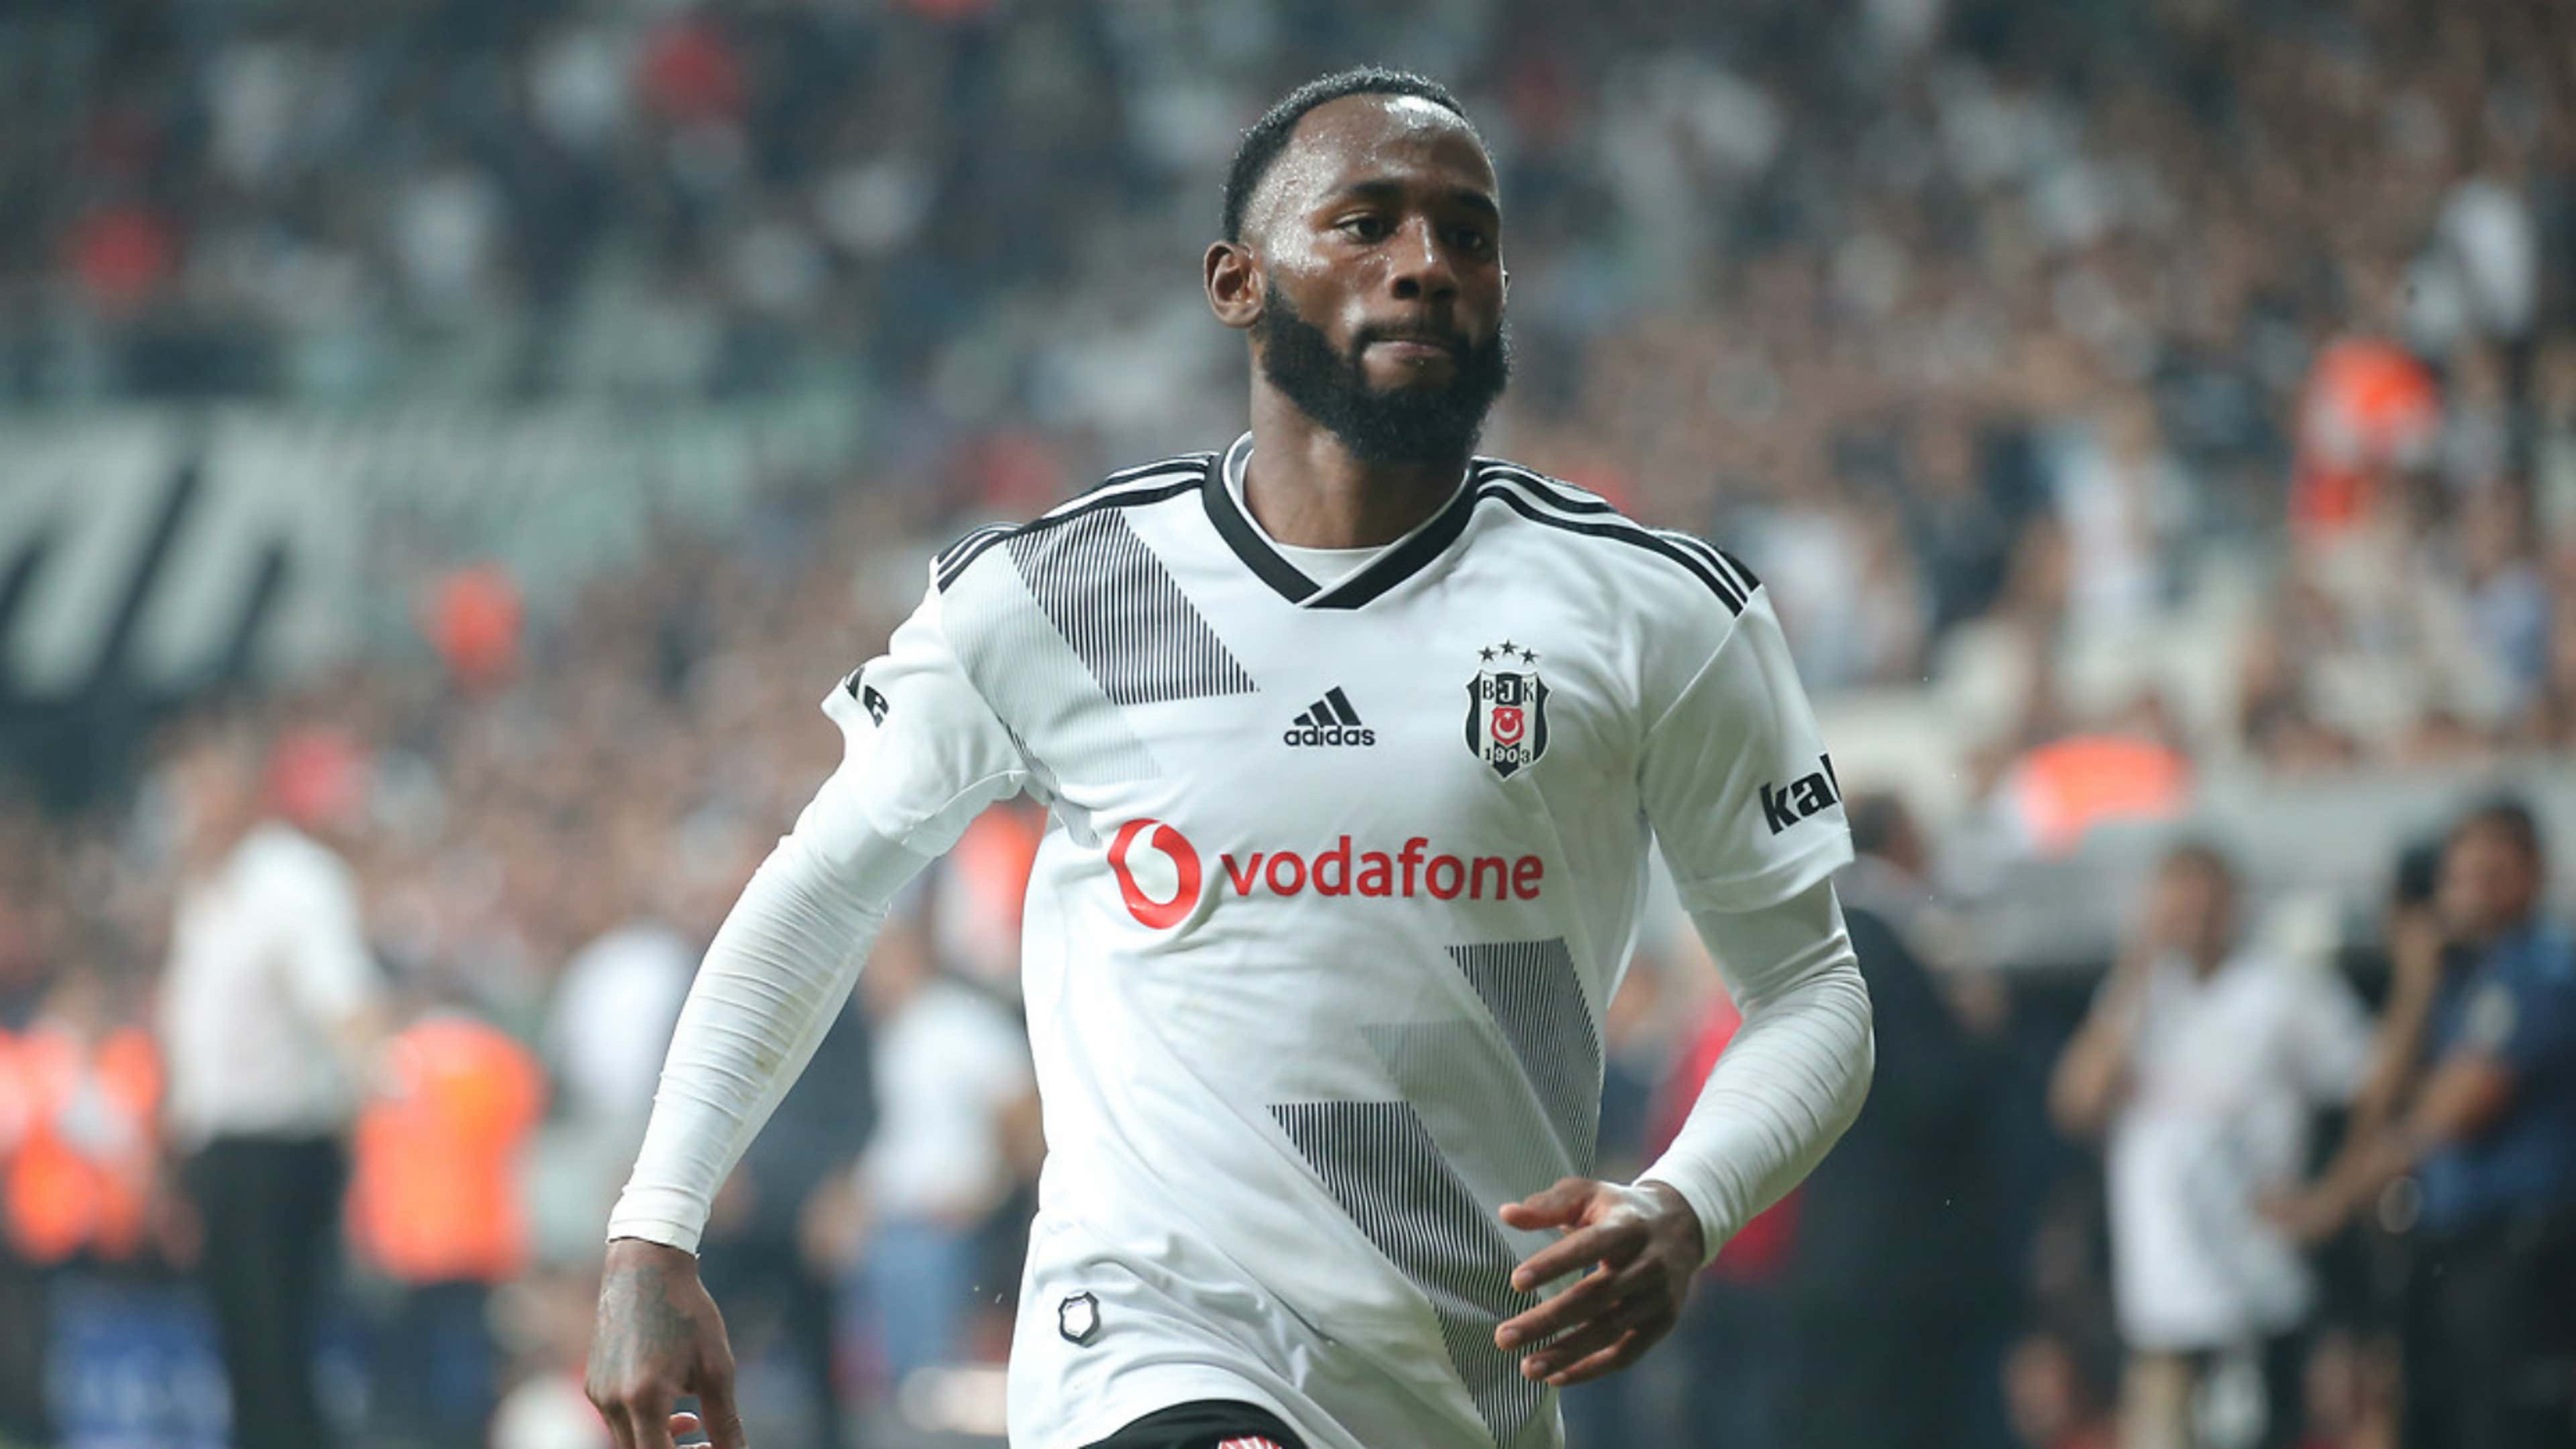 N'Koudou scores as Besiktas hit seven past Hatayspor